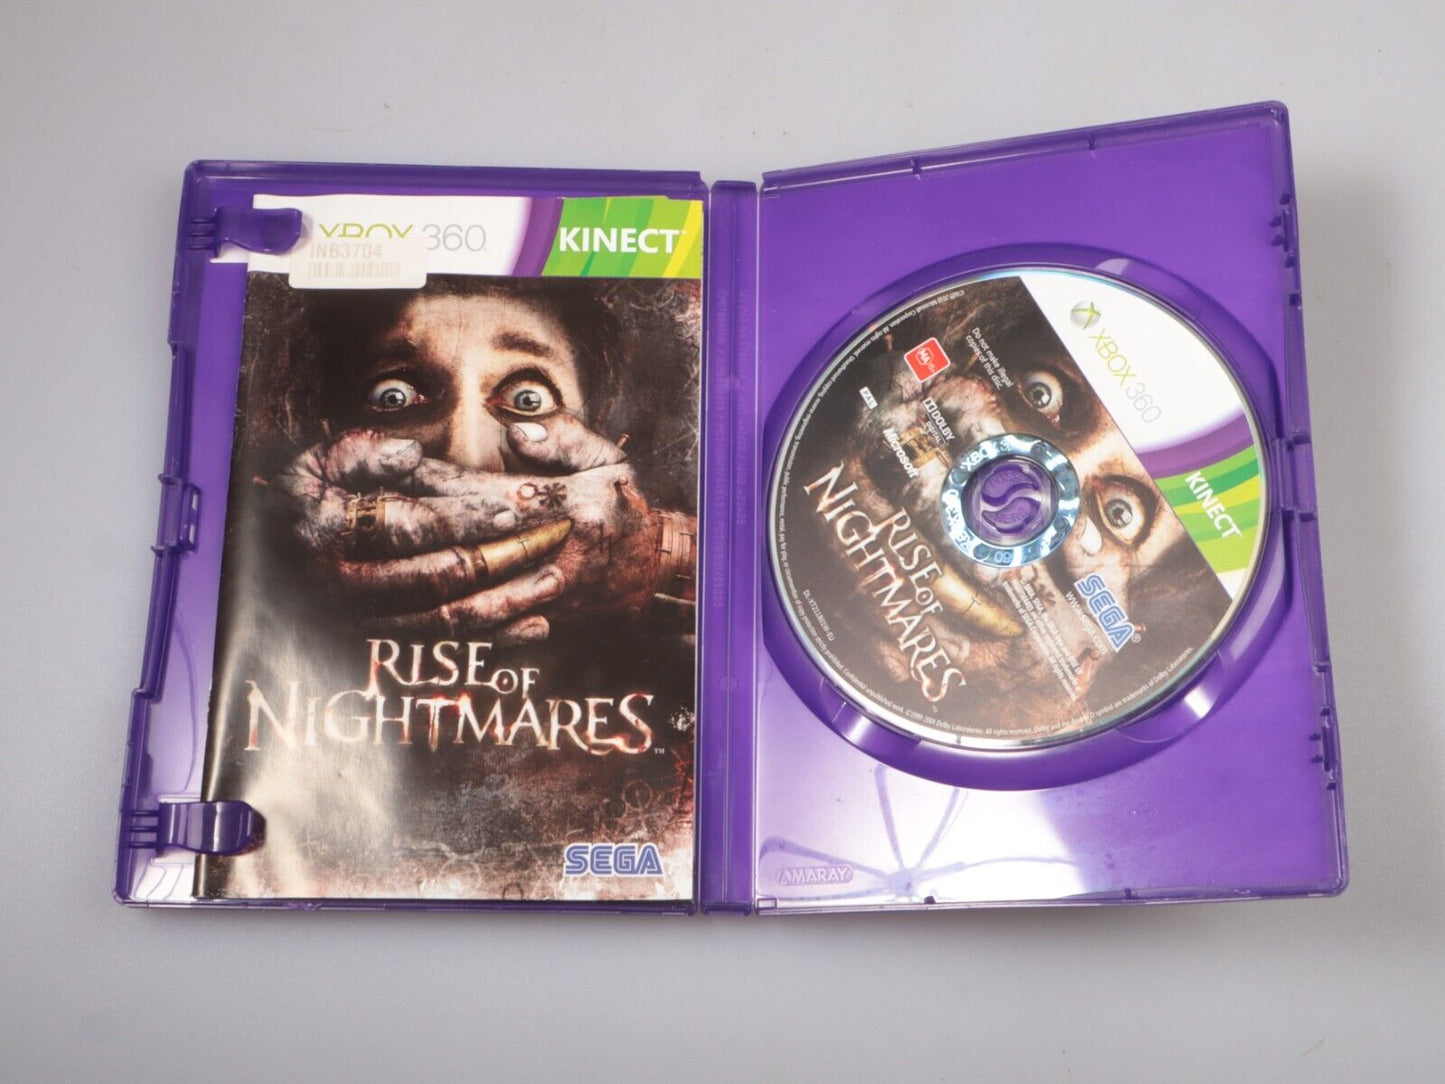 Xbox 360 | Rise Of Nightmares